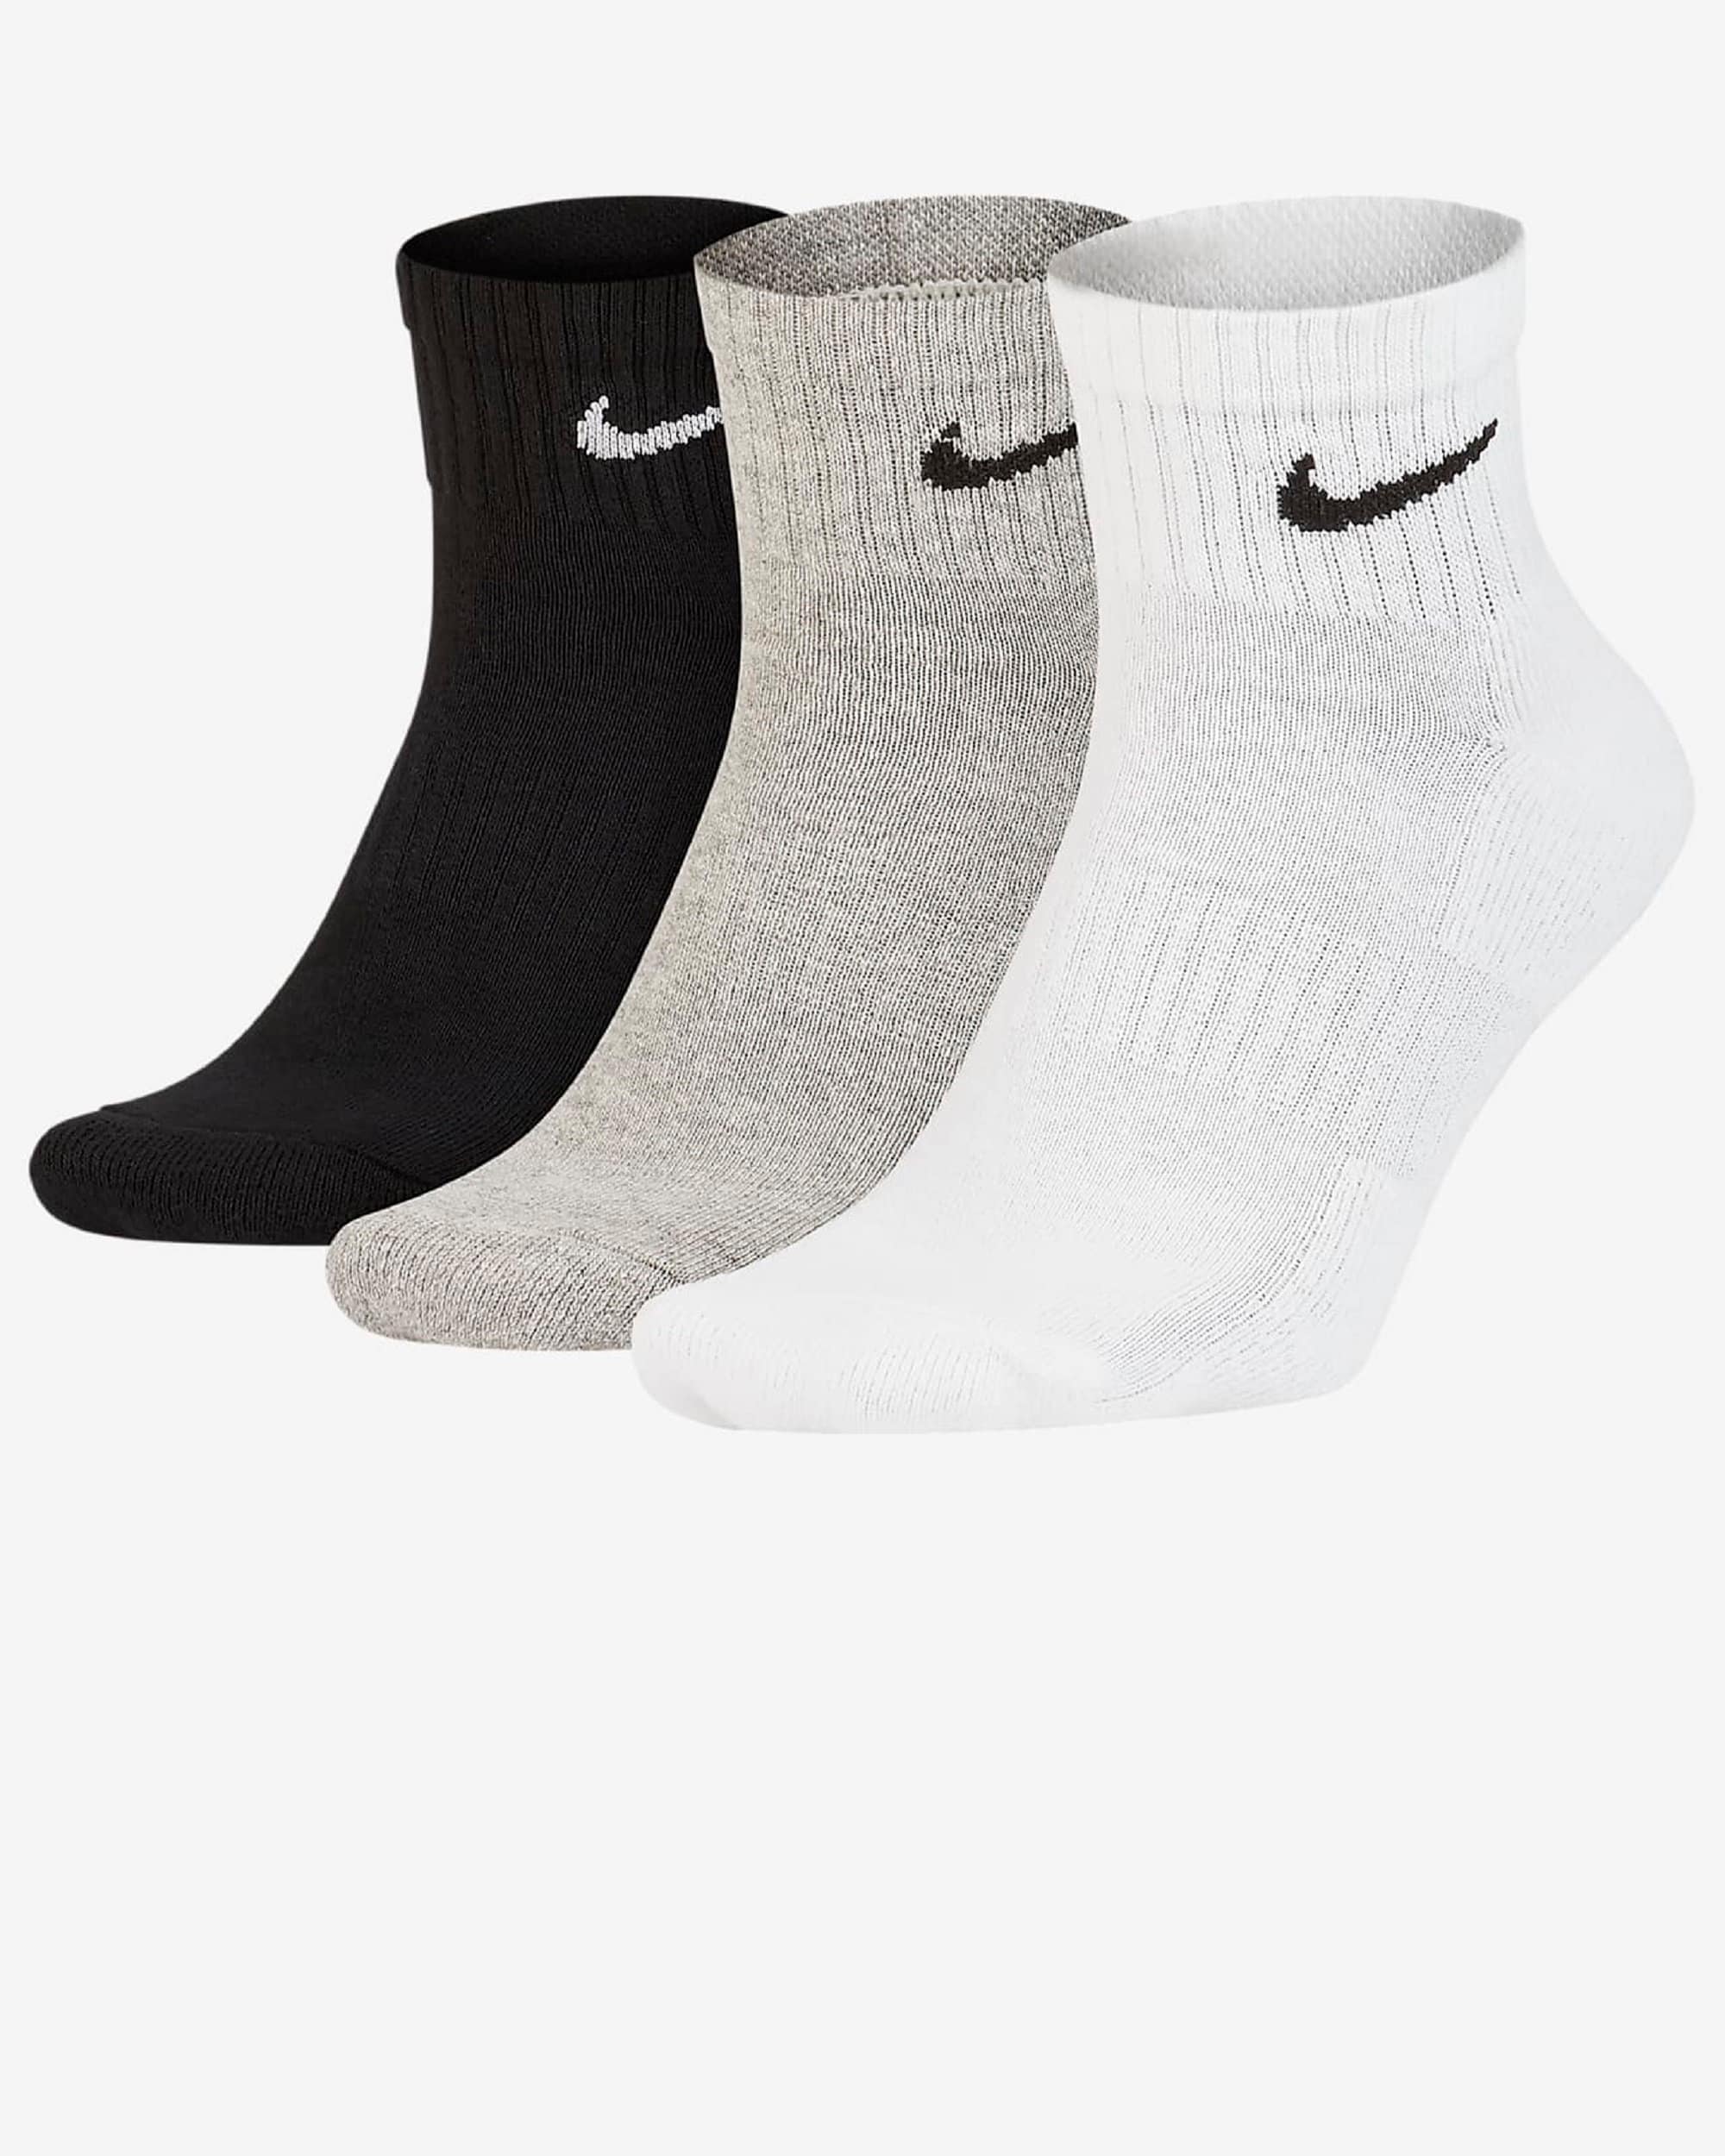 Nike Sports Socks Comfort Multi Color Casual Wear 3 Pair Socks | Etsy